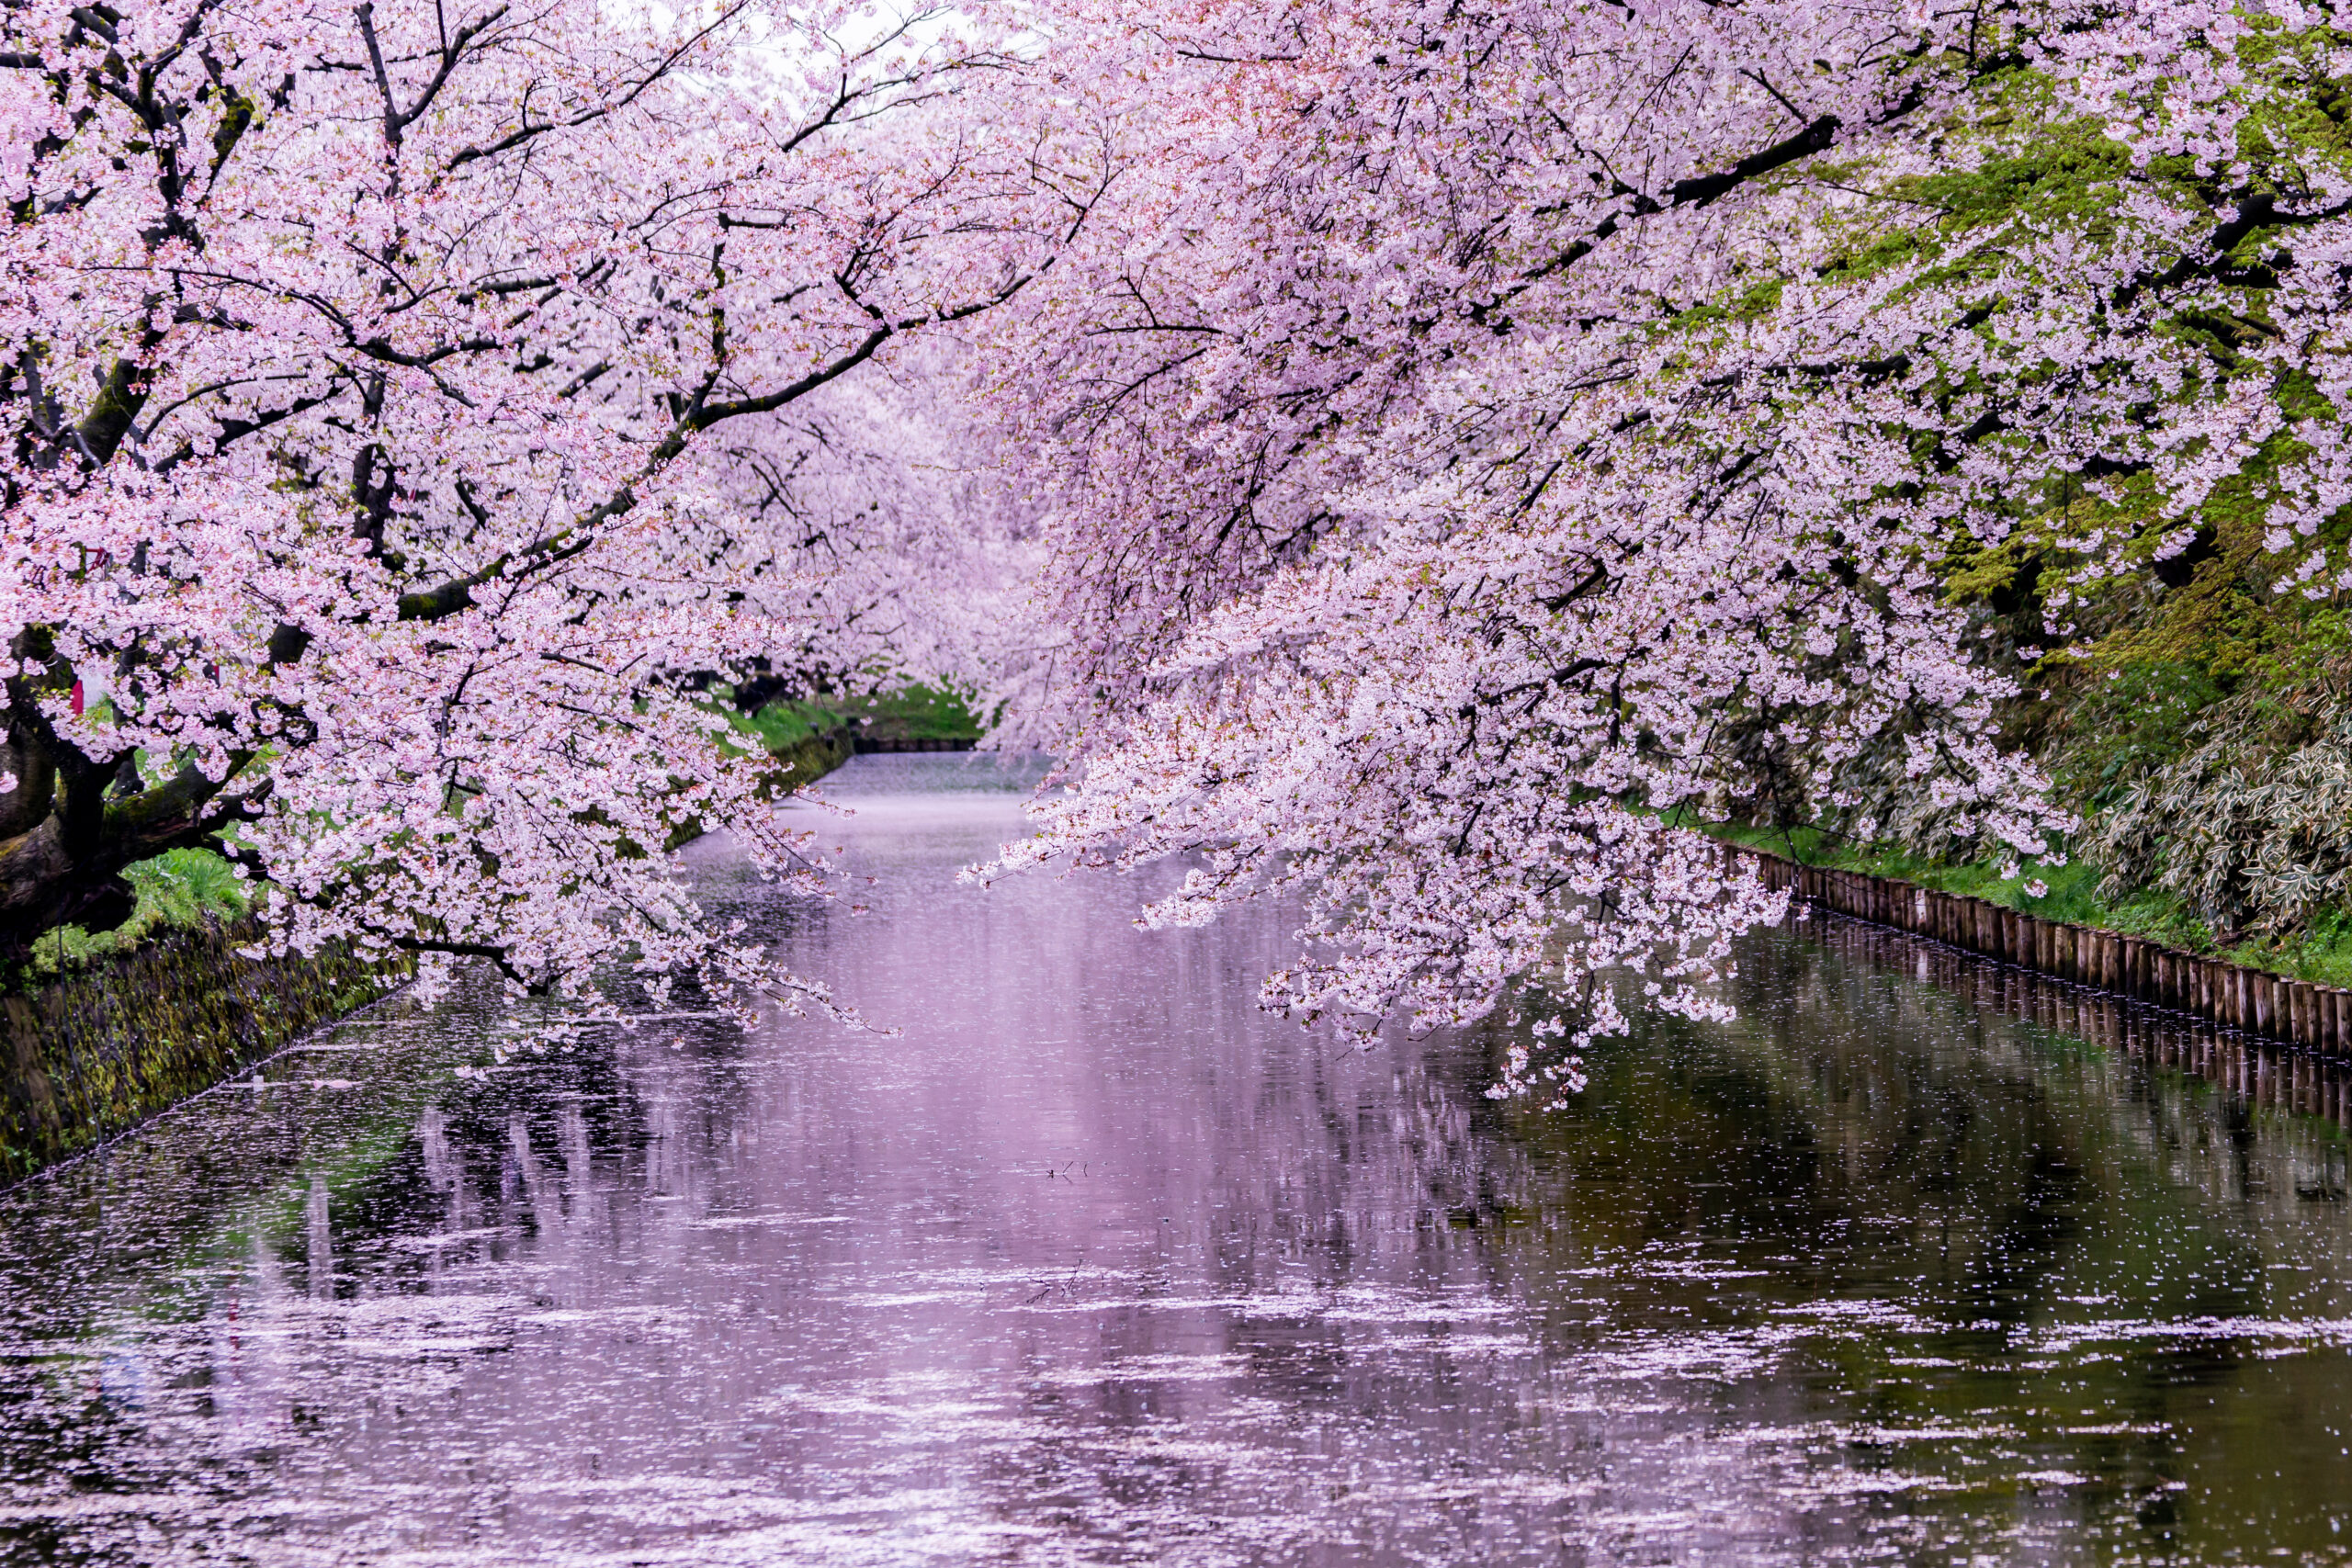 hirosaki park sakura petals